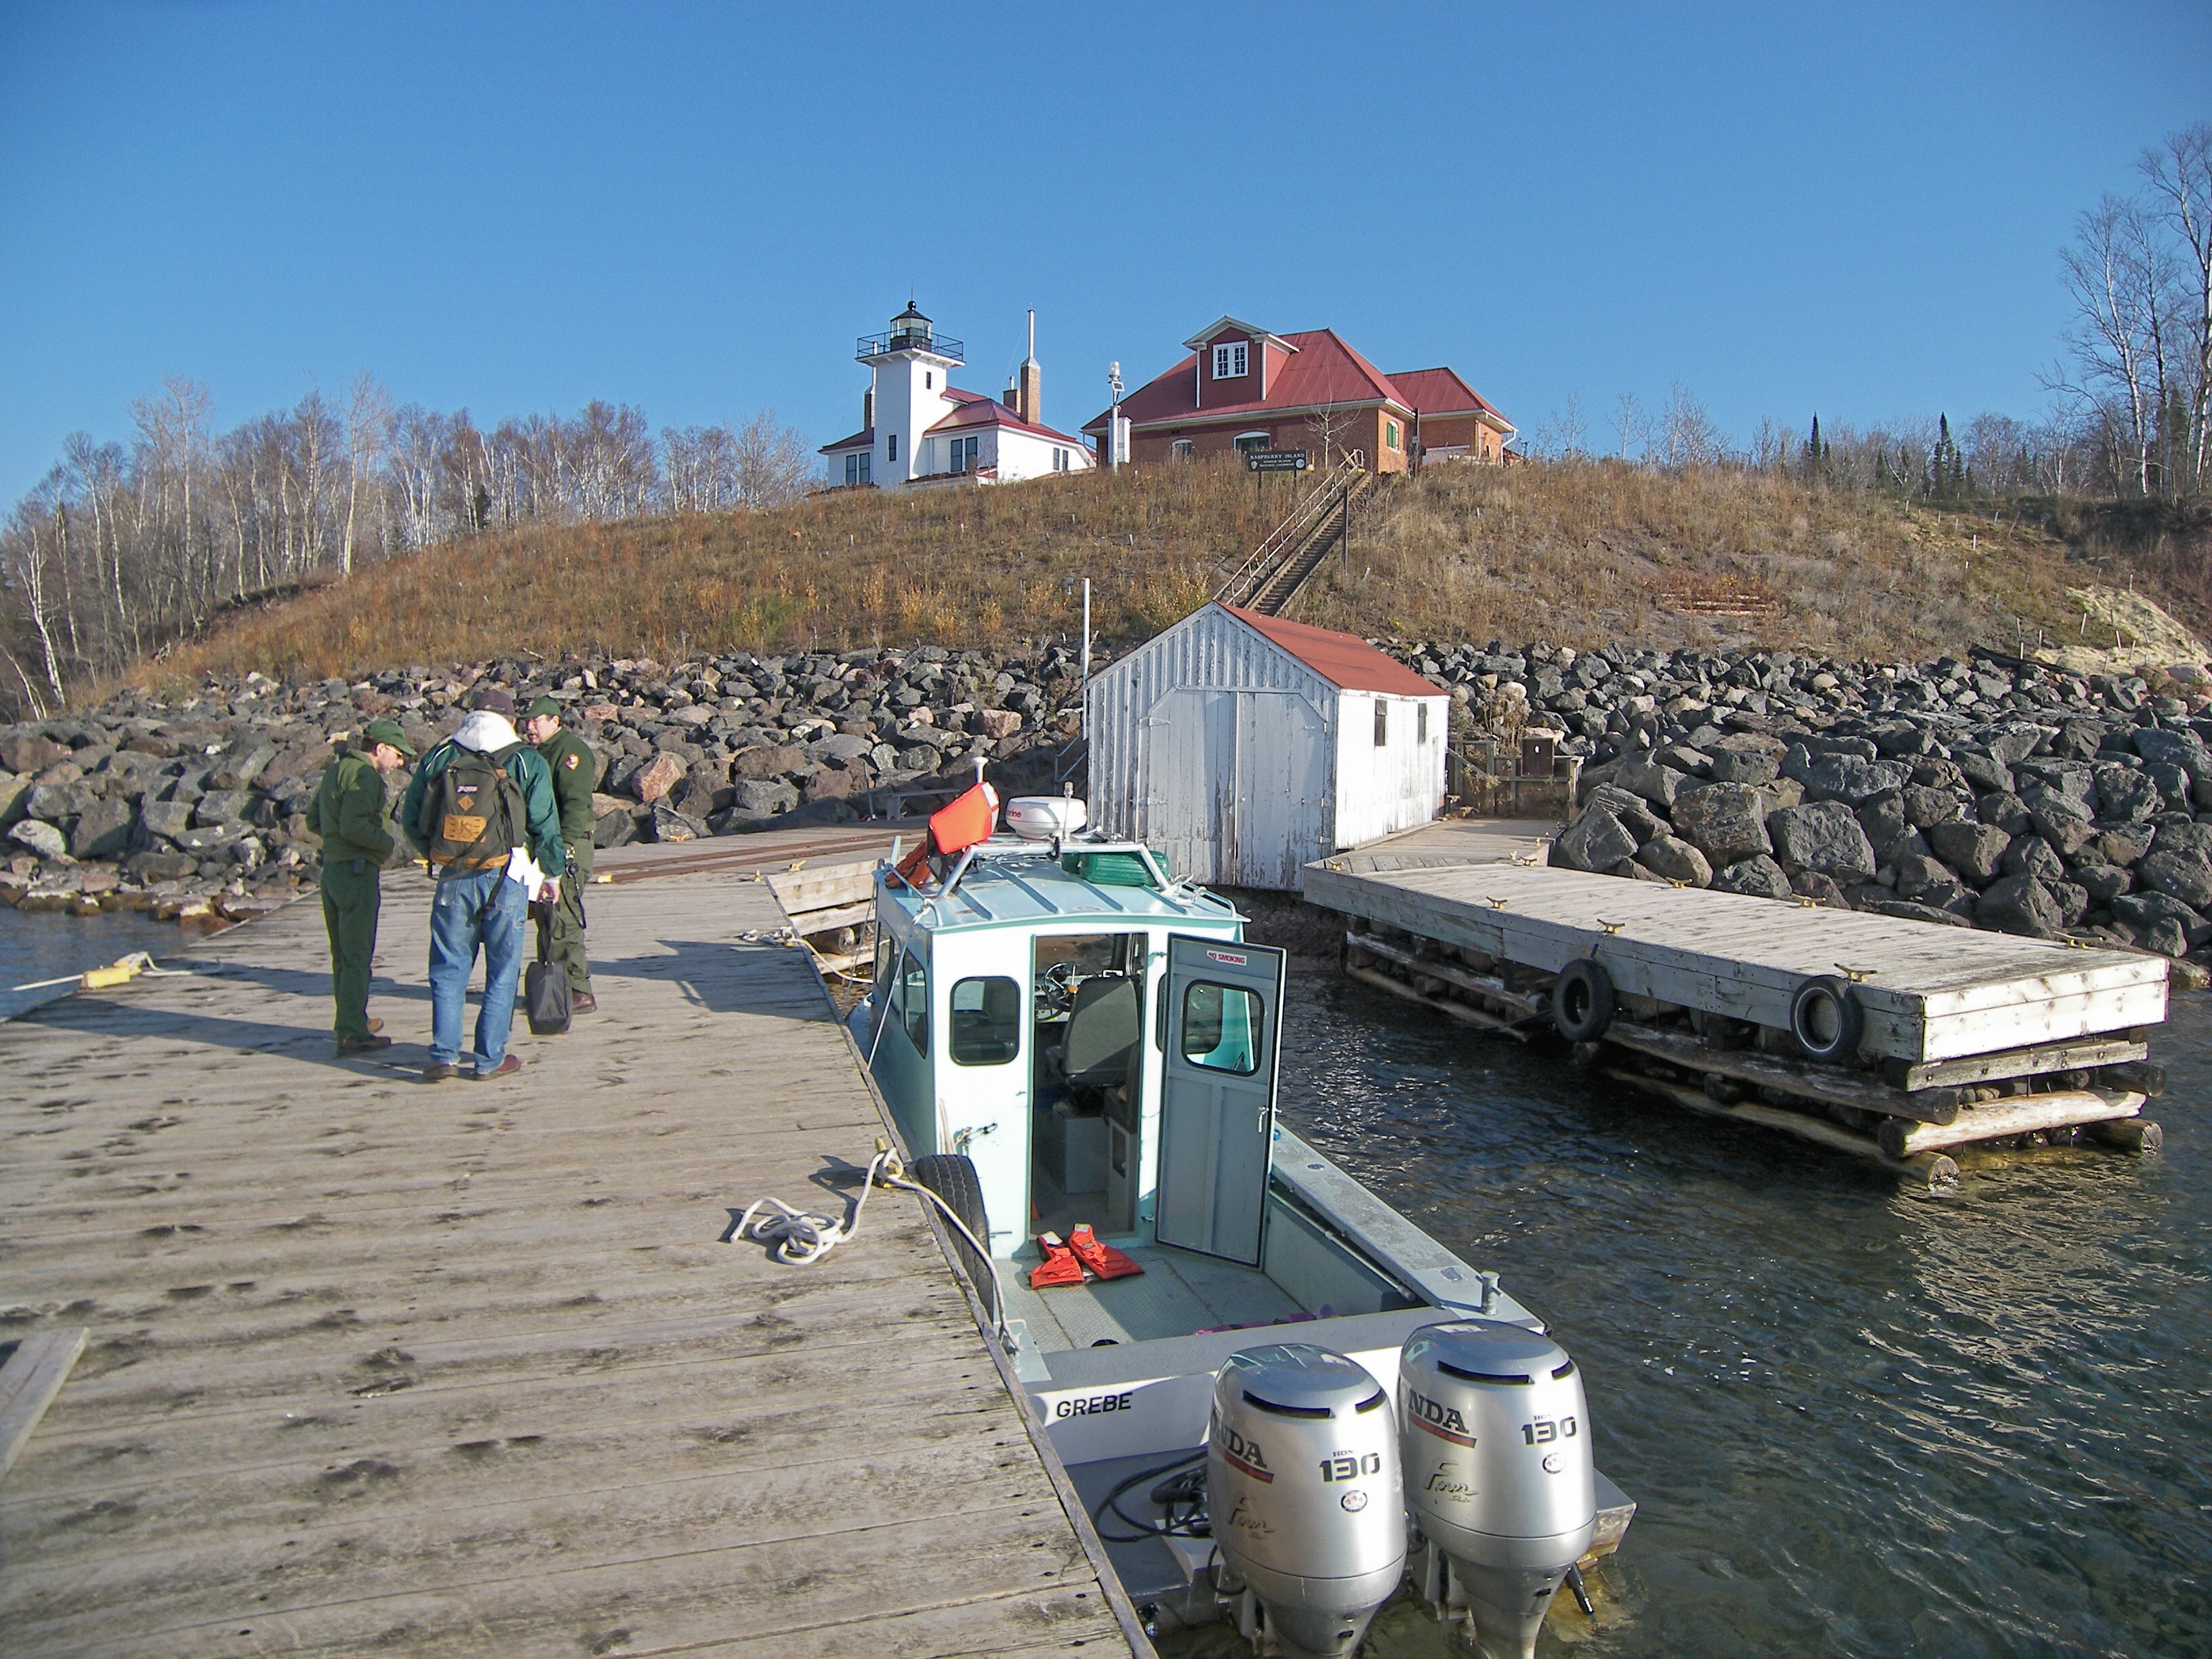 Raspberry Island Dock in 2016